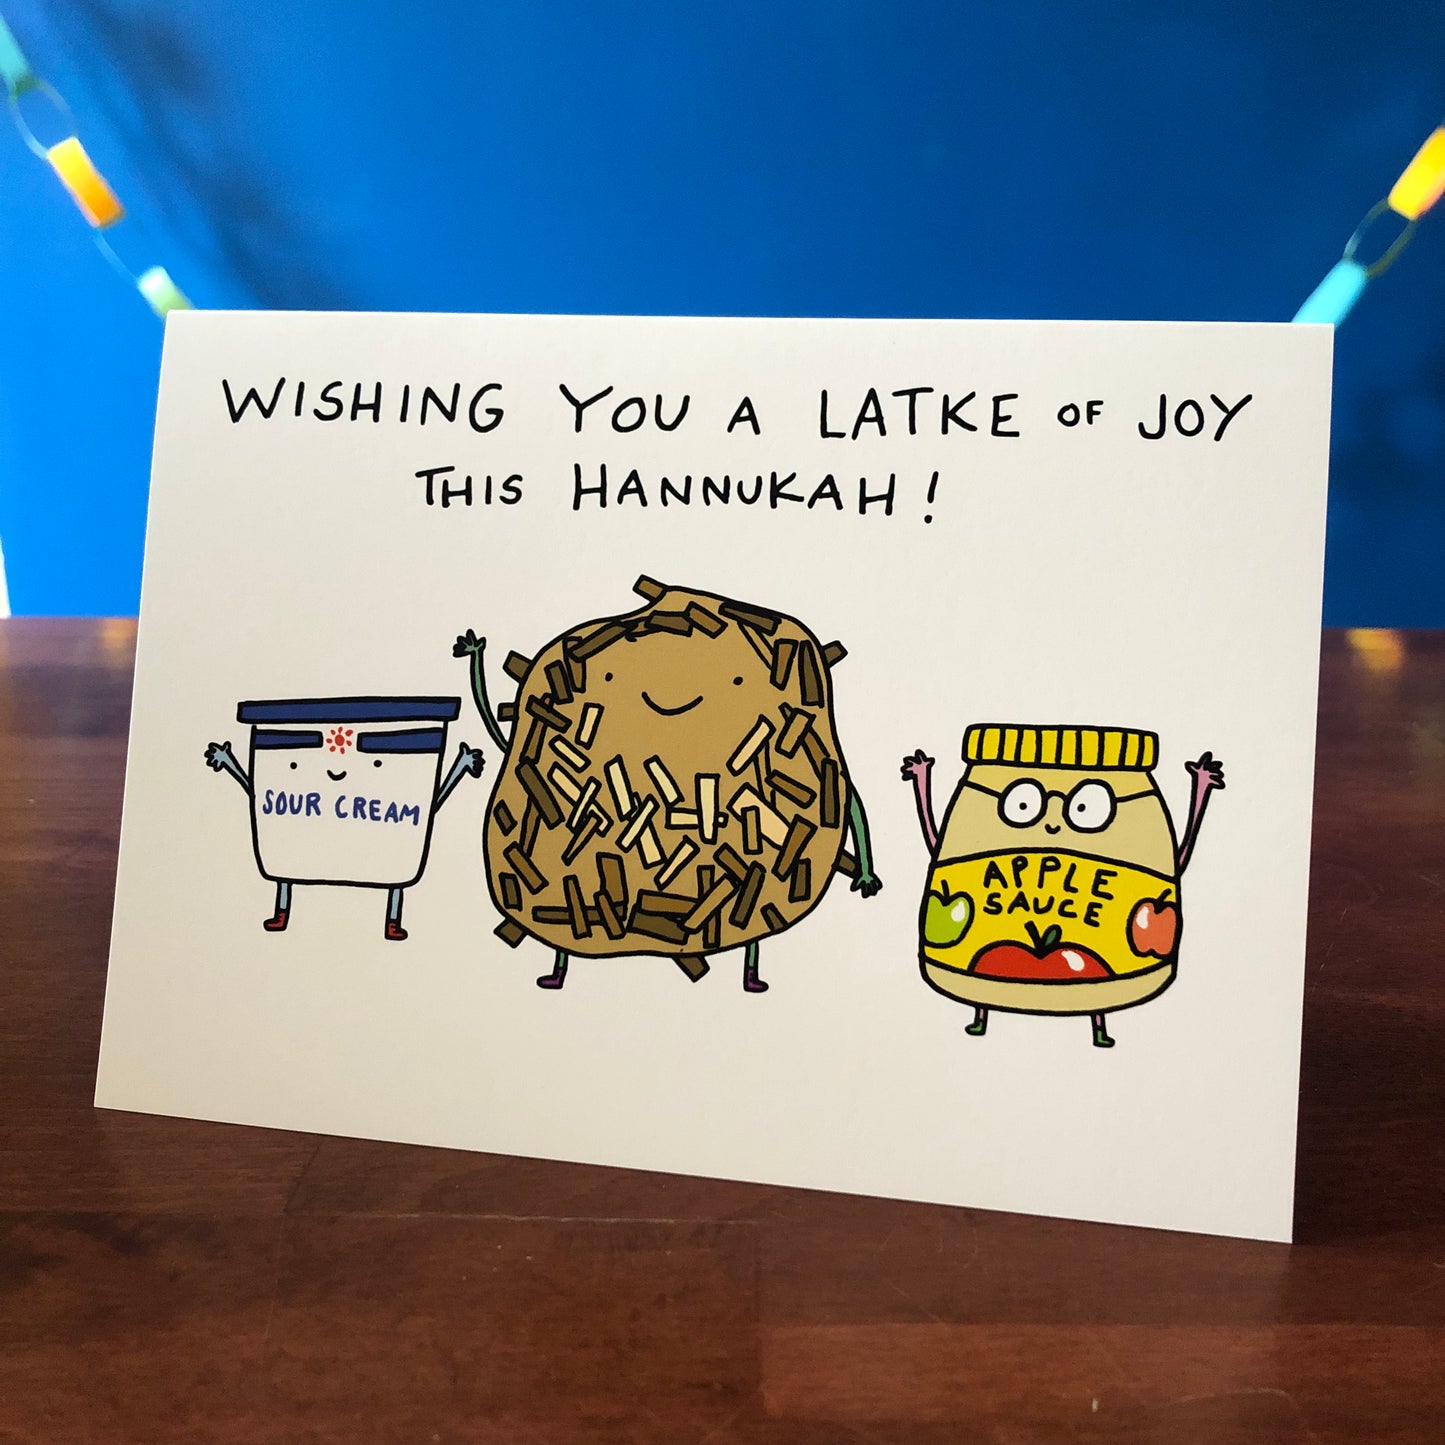 A Latke of Joy - Hannukah Holiday Greeting Card (5" x 7", with envelope)